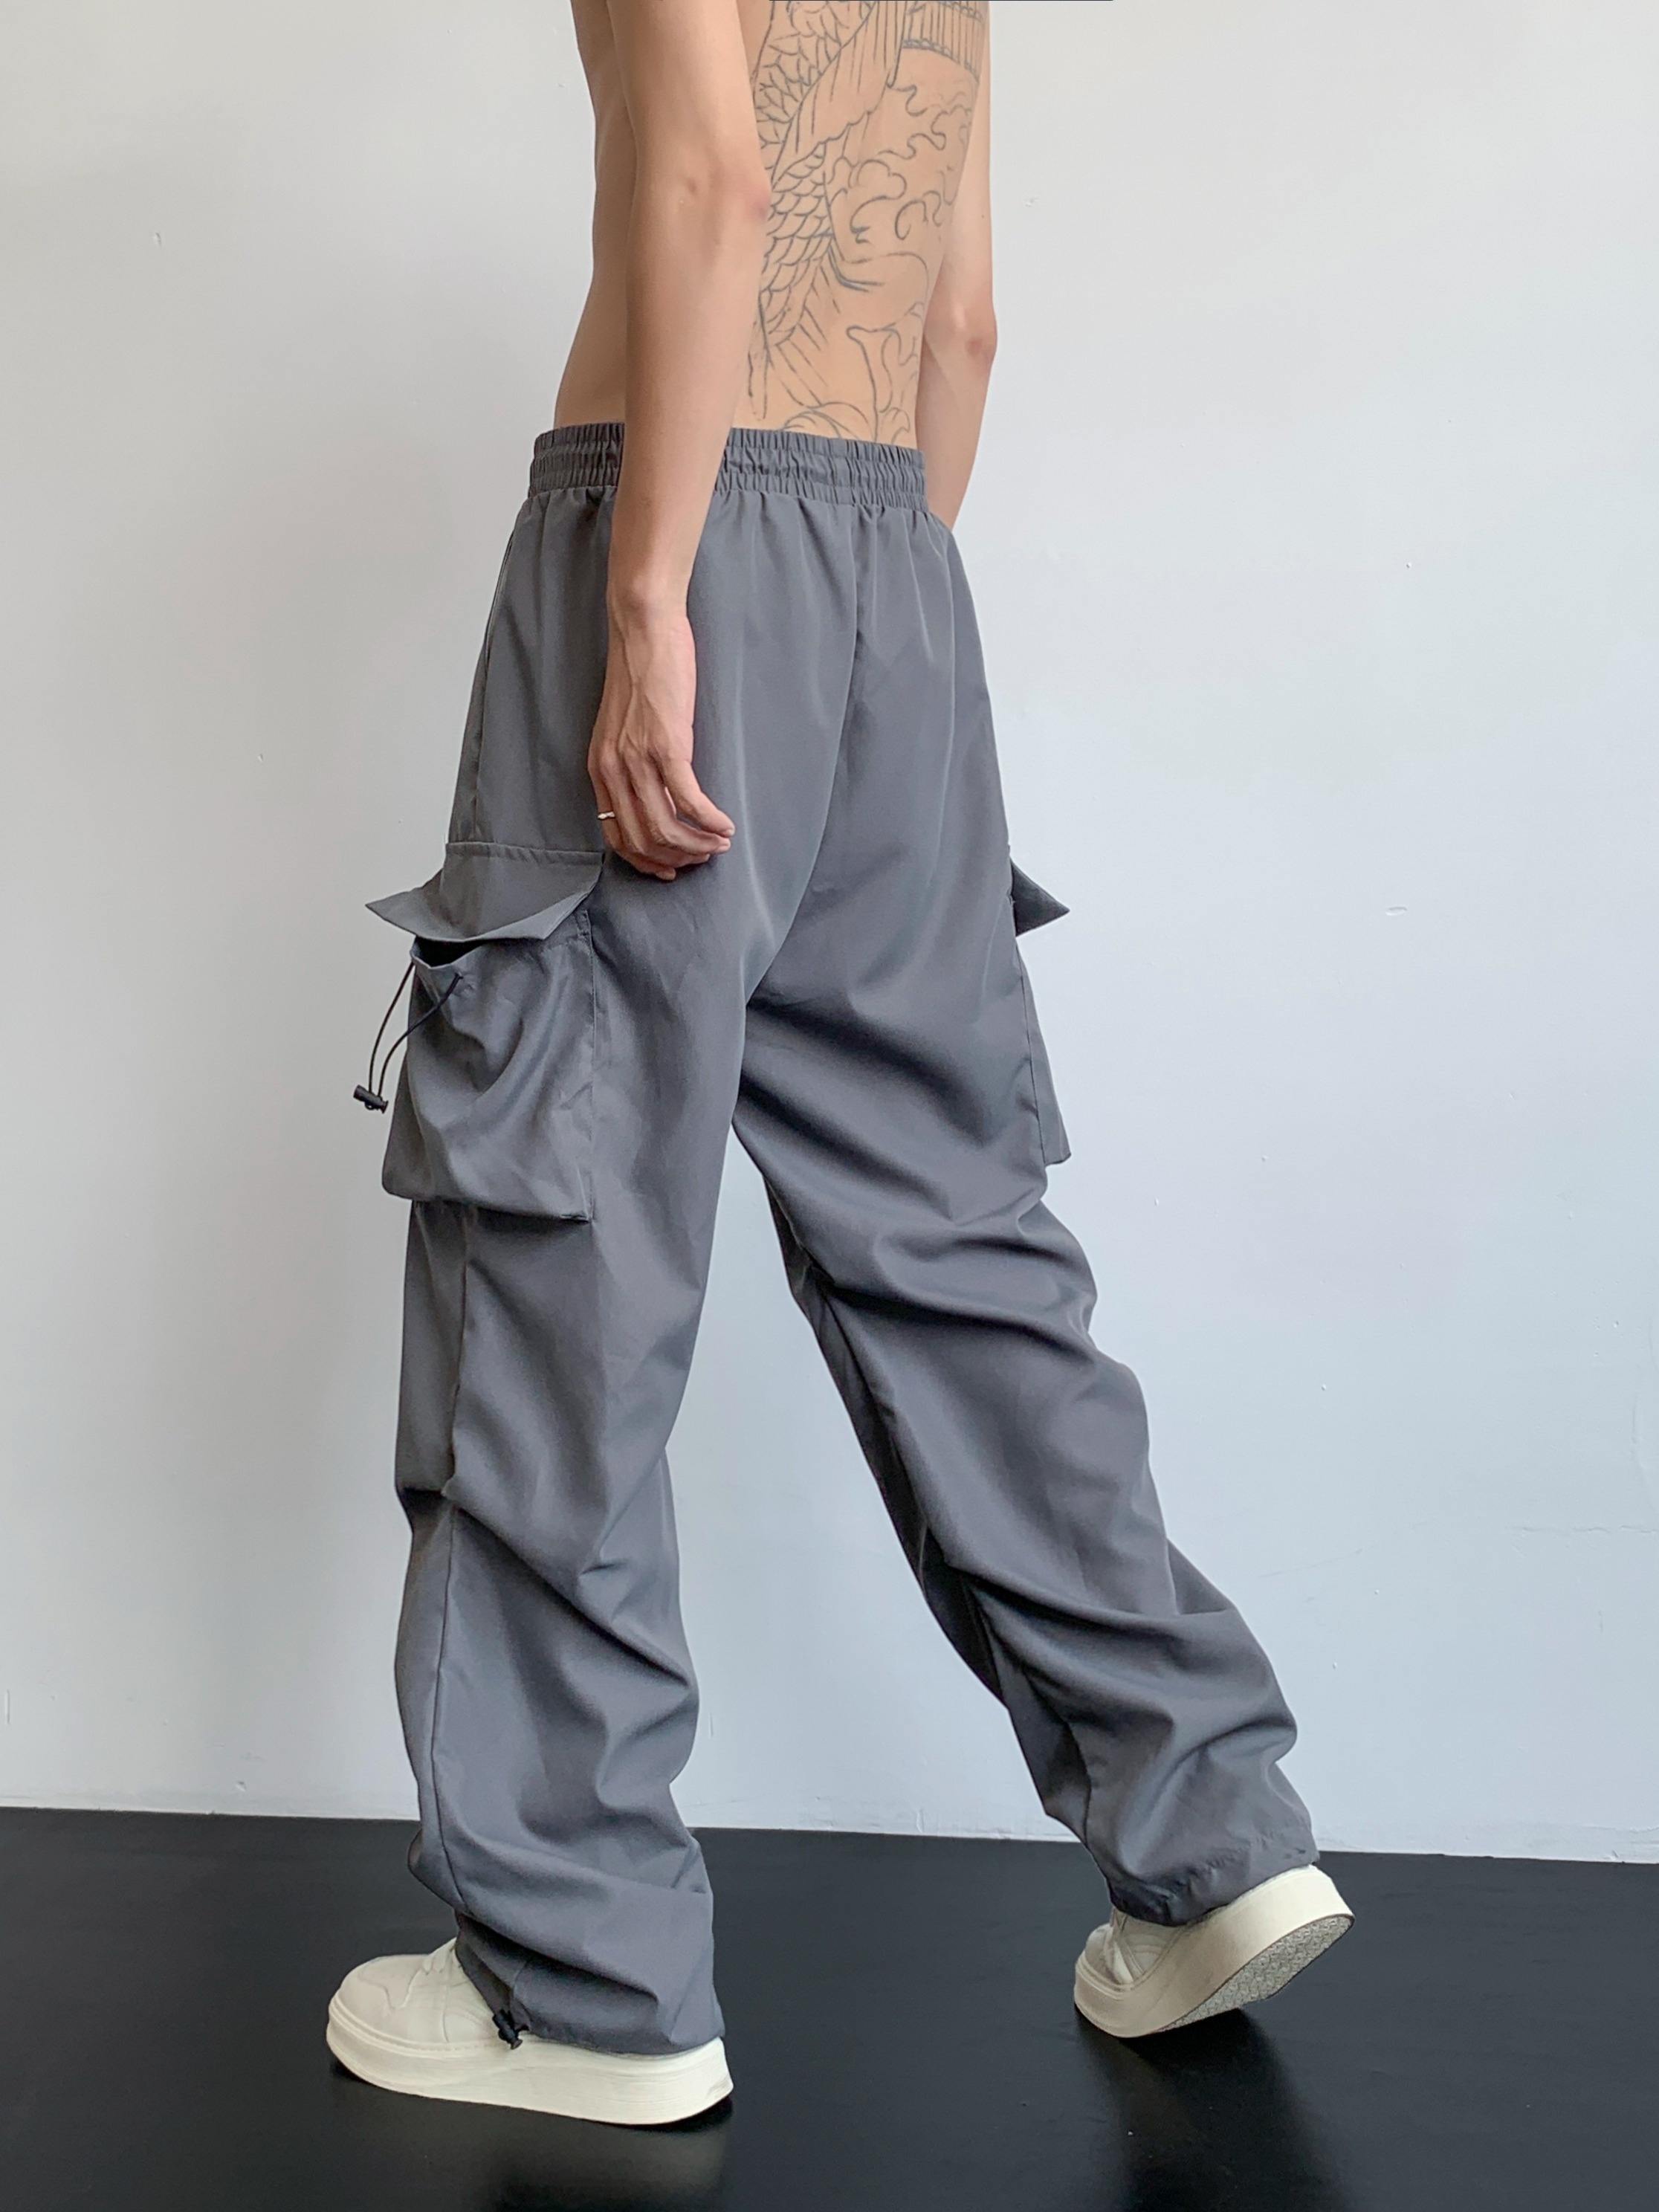 Wide Pants For Women Spring/Summer Baggy Pants Joggers Hip Hop